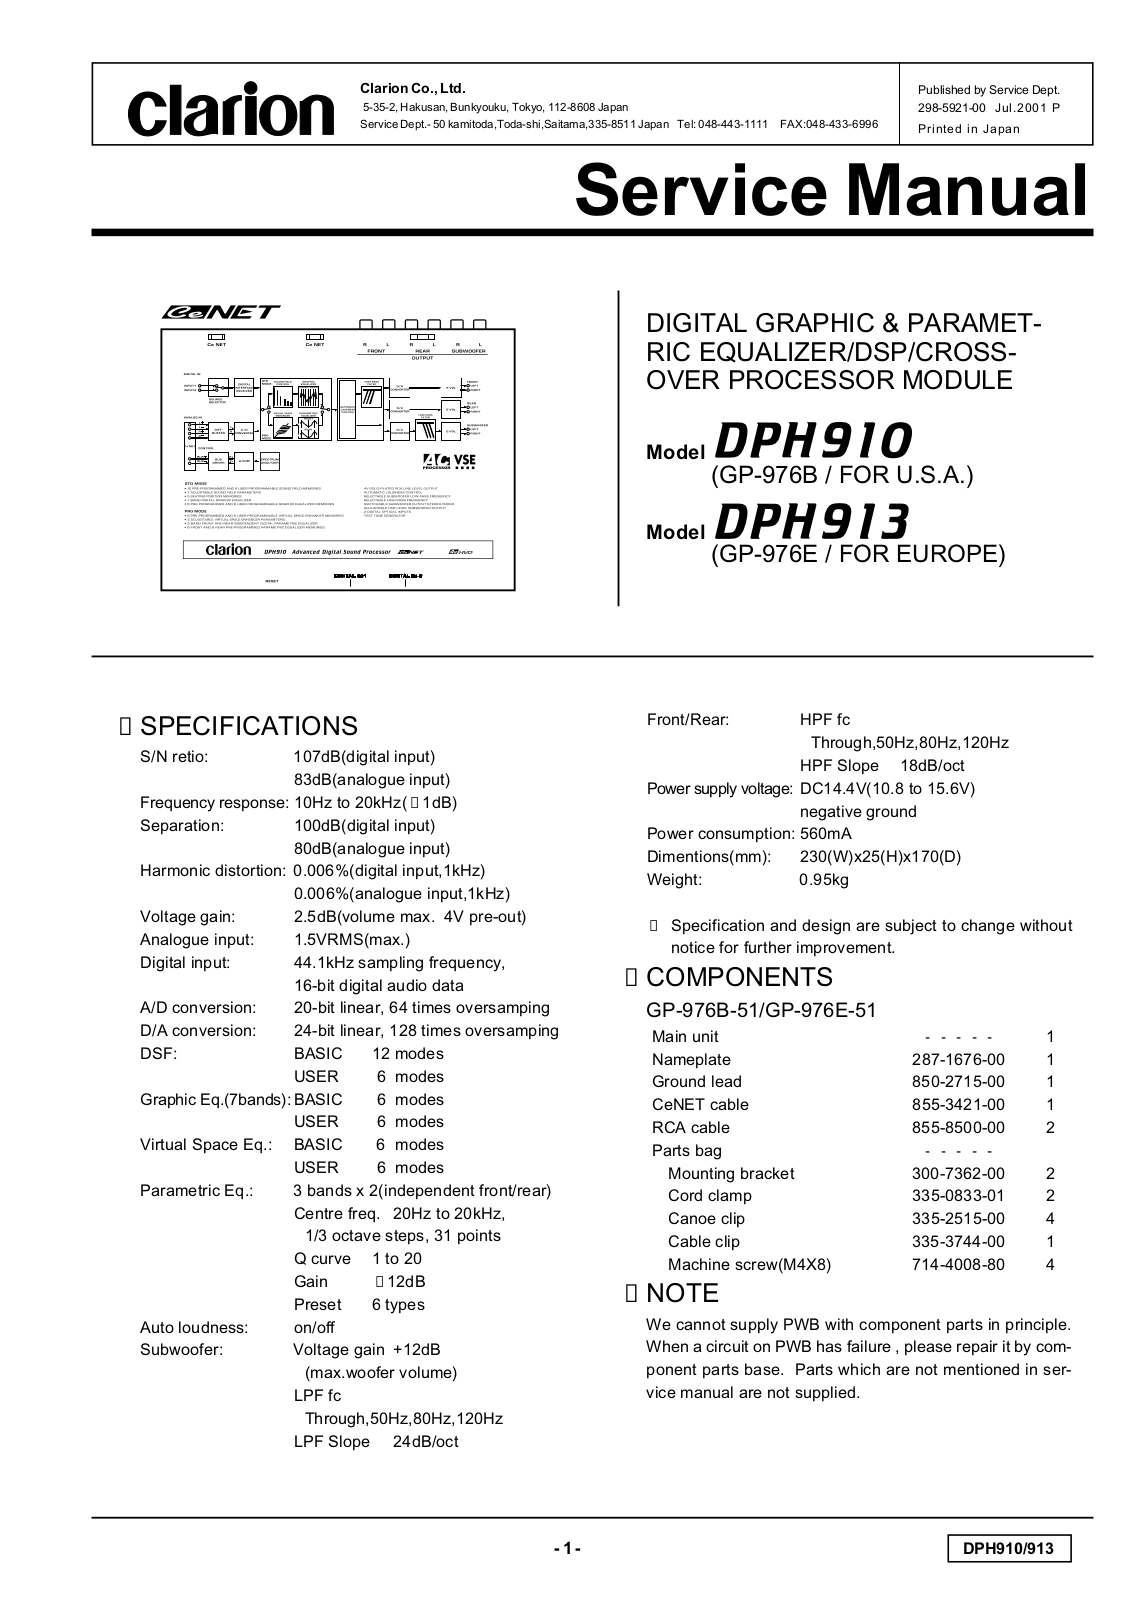 Clarion DPH910, DPH913 Service Manual